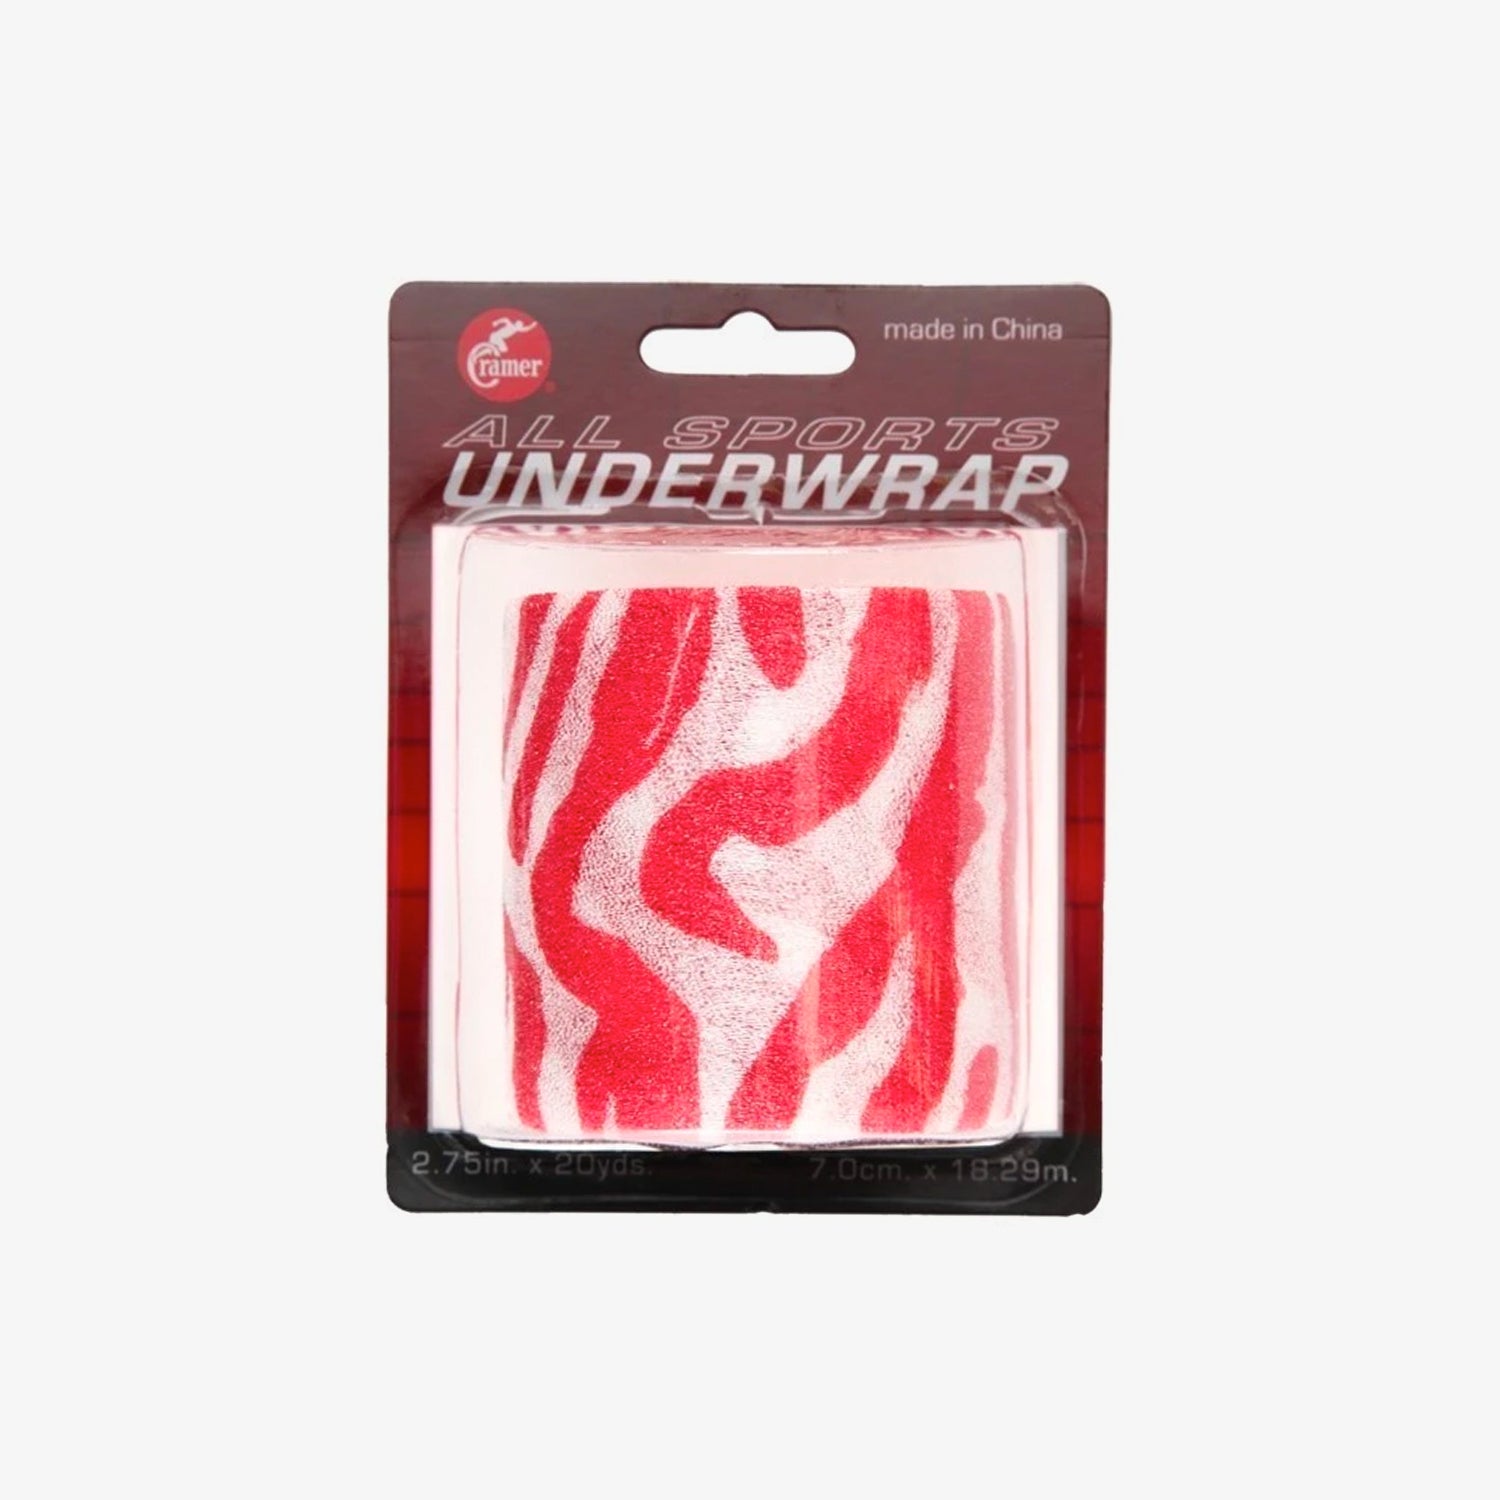 Zebra Underwrap Red